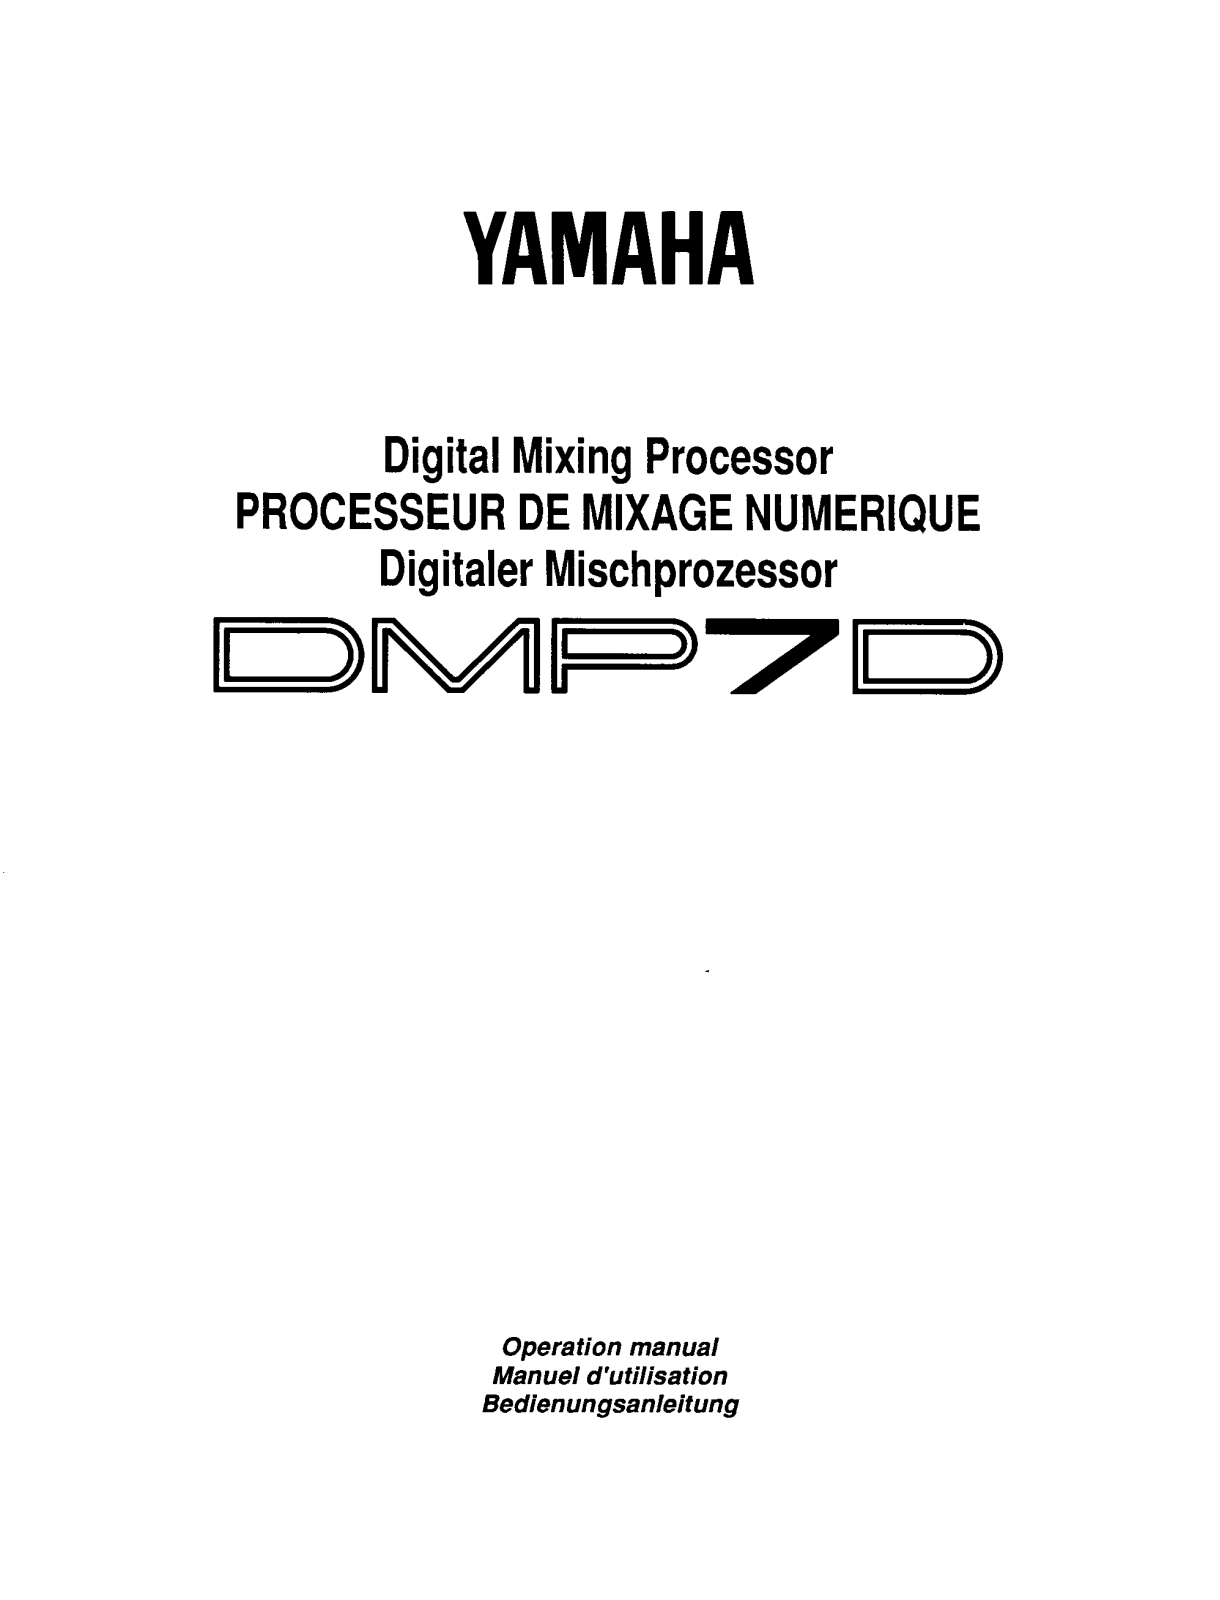 Yamaha DMP7D User Guide